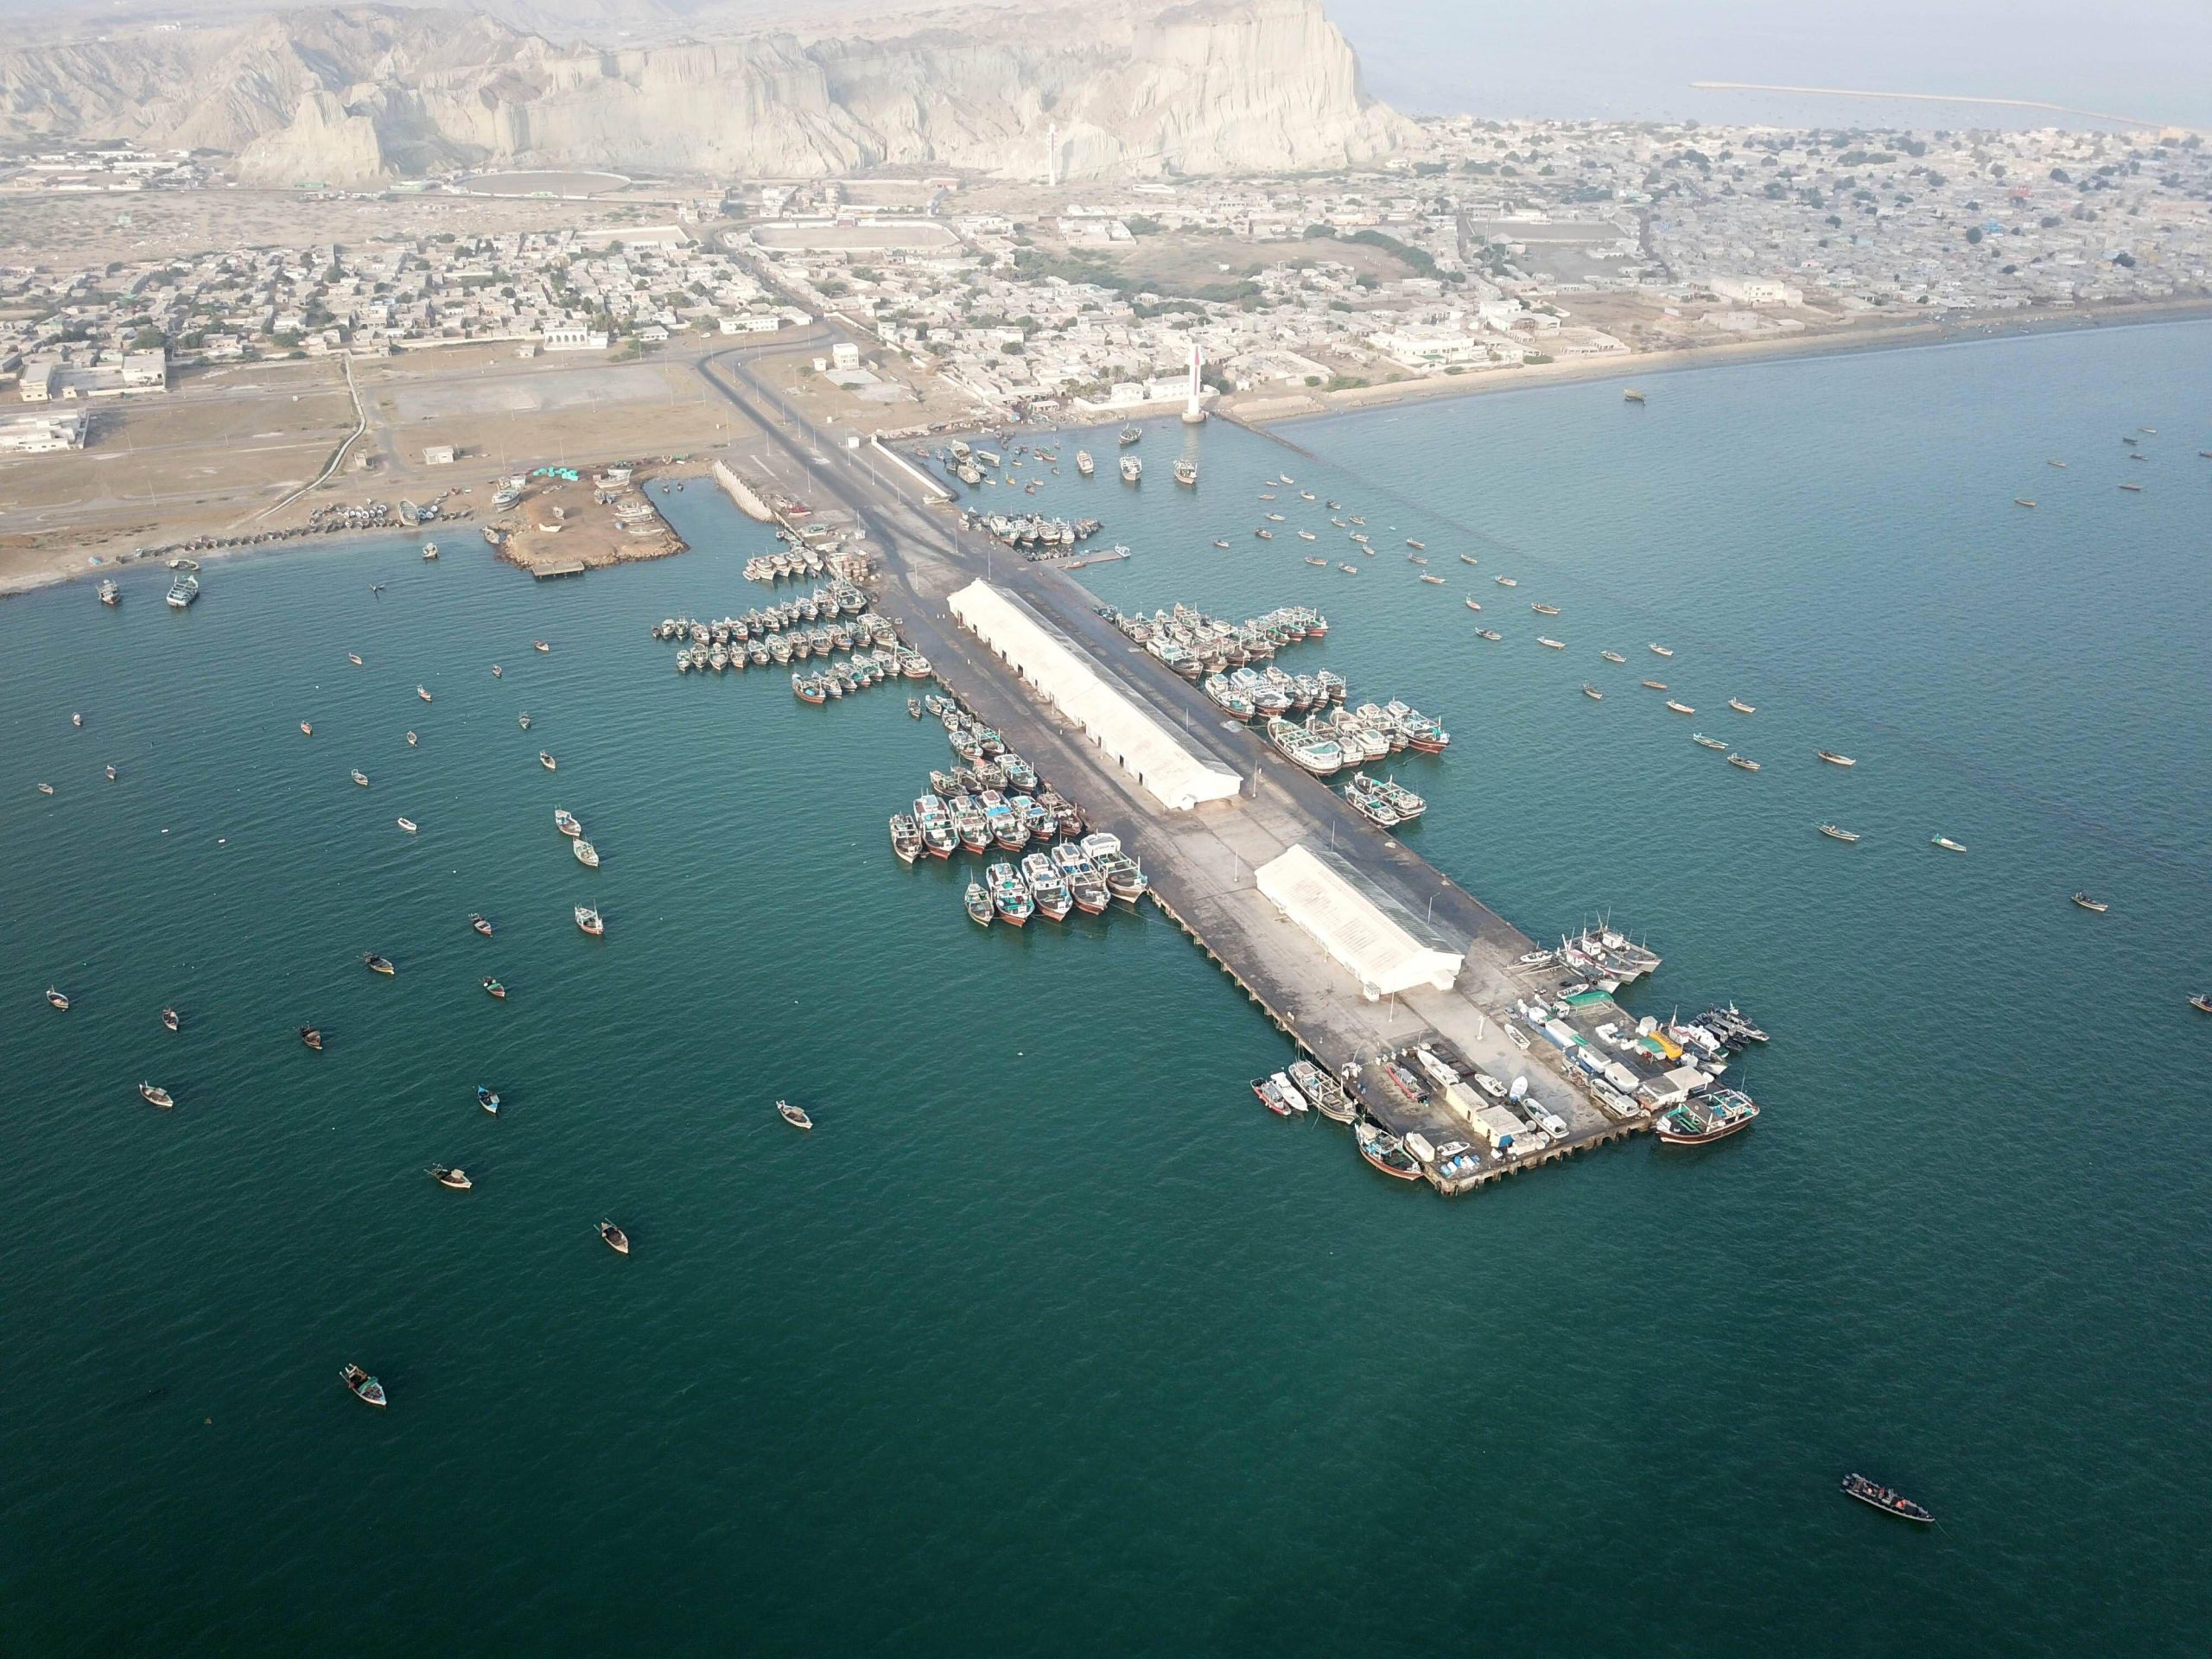 <p>گوادر کی بندرگاہ کے اِس فضائی منظر میں پاکستان کے جنوب مغرب میں خلیج میں ماہی گیری کی کشتیاں دکھائی دے رہی ہیں۔ (تصویر: احمد کمال/ الامی)<br />
Sajid Aziz</p>